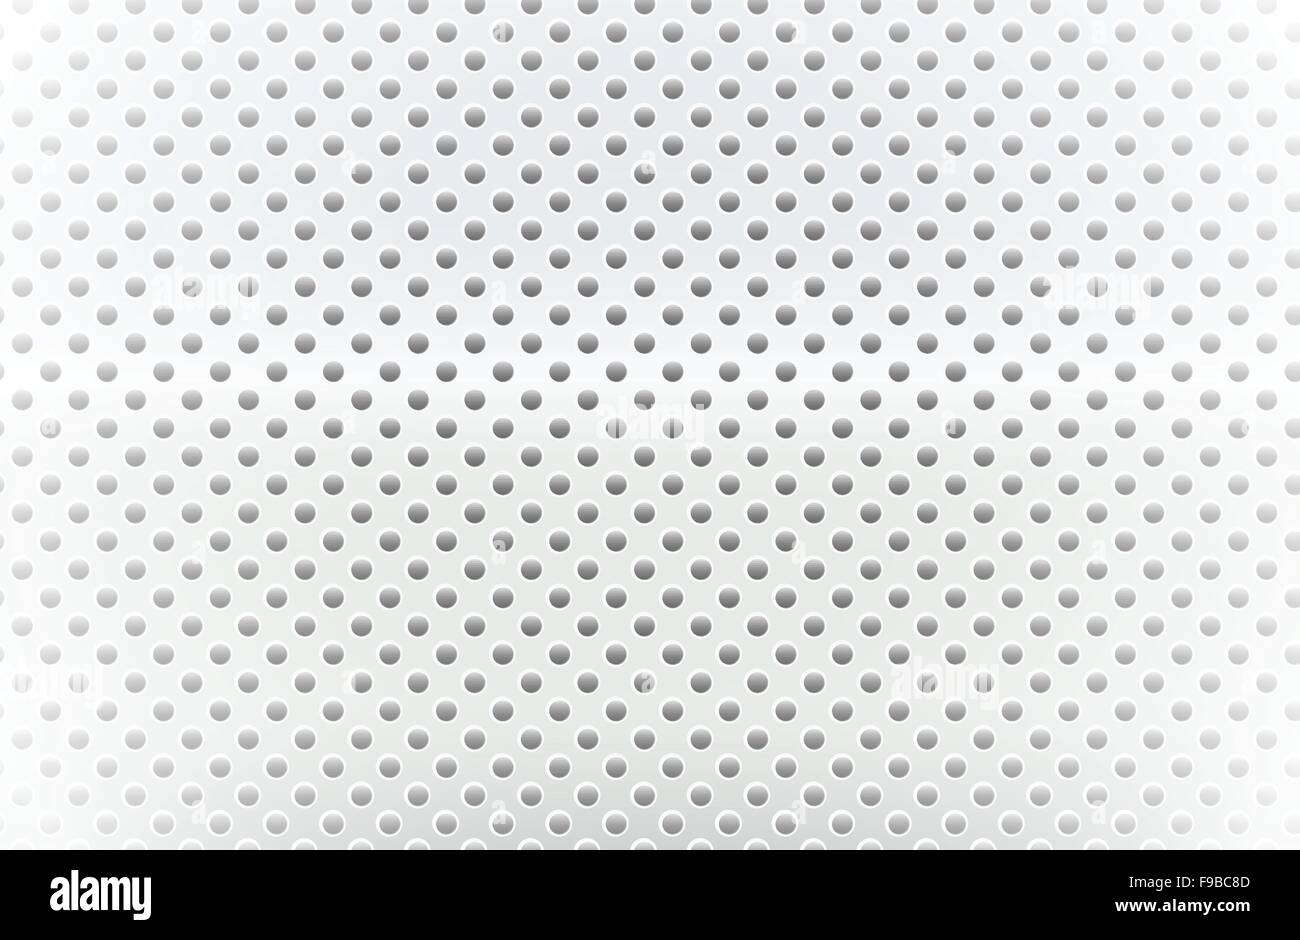 White dot pattern background Stock Vector